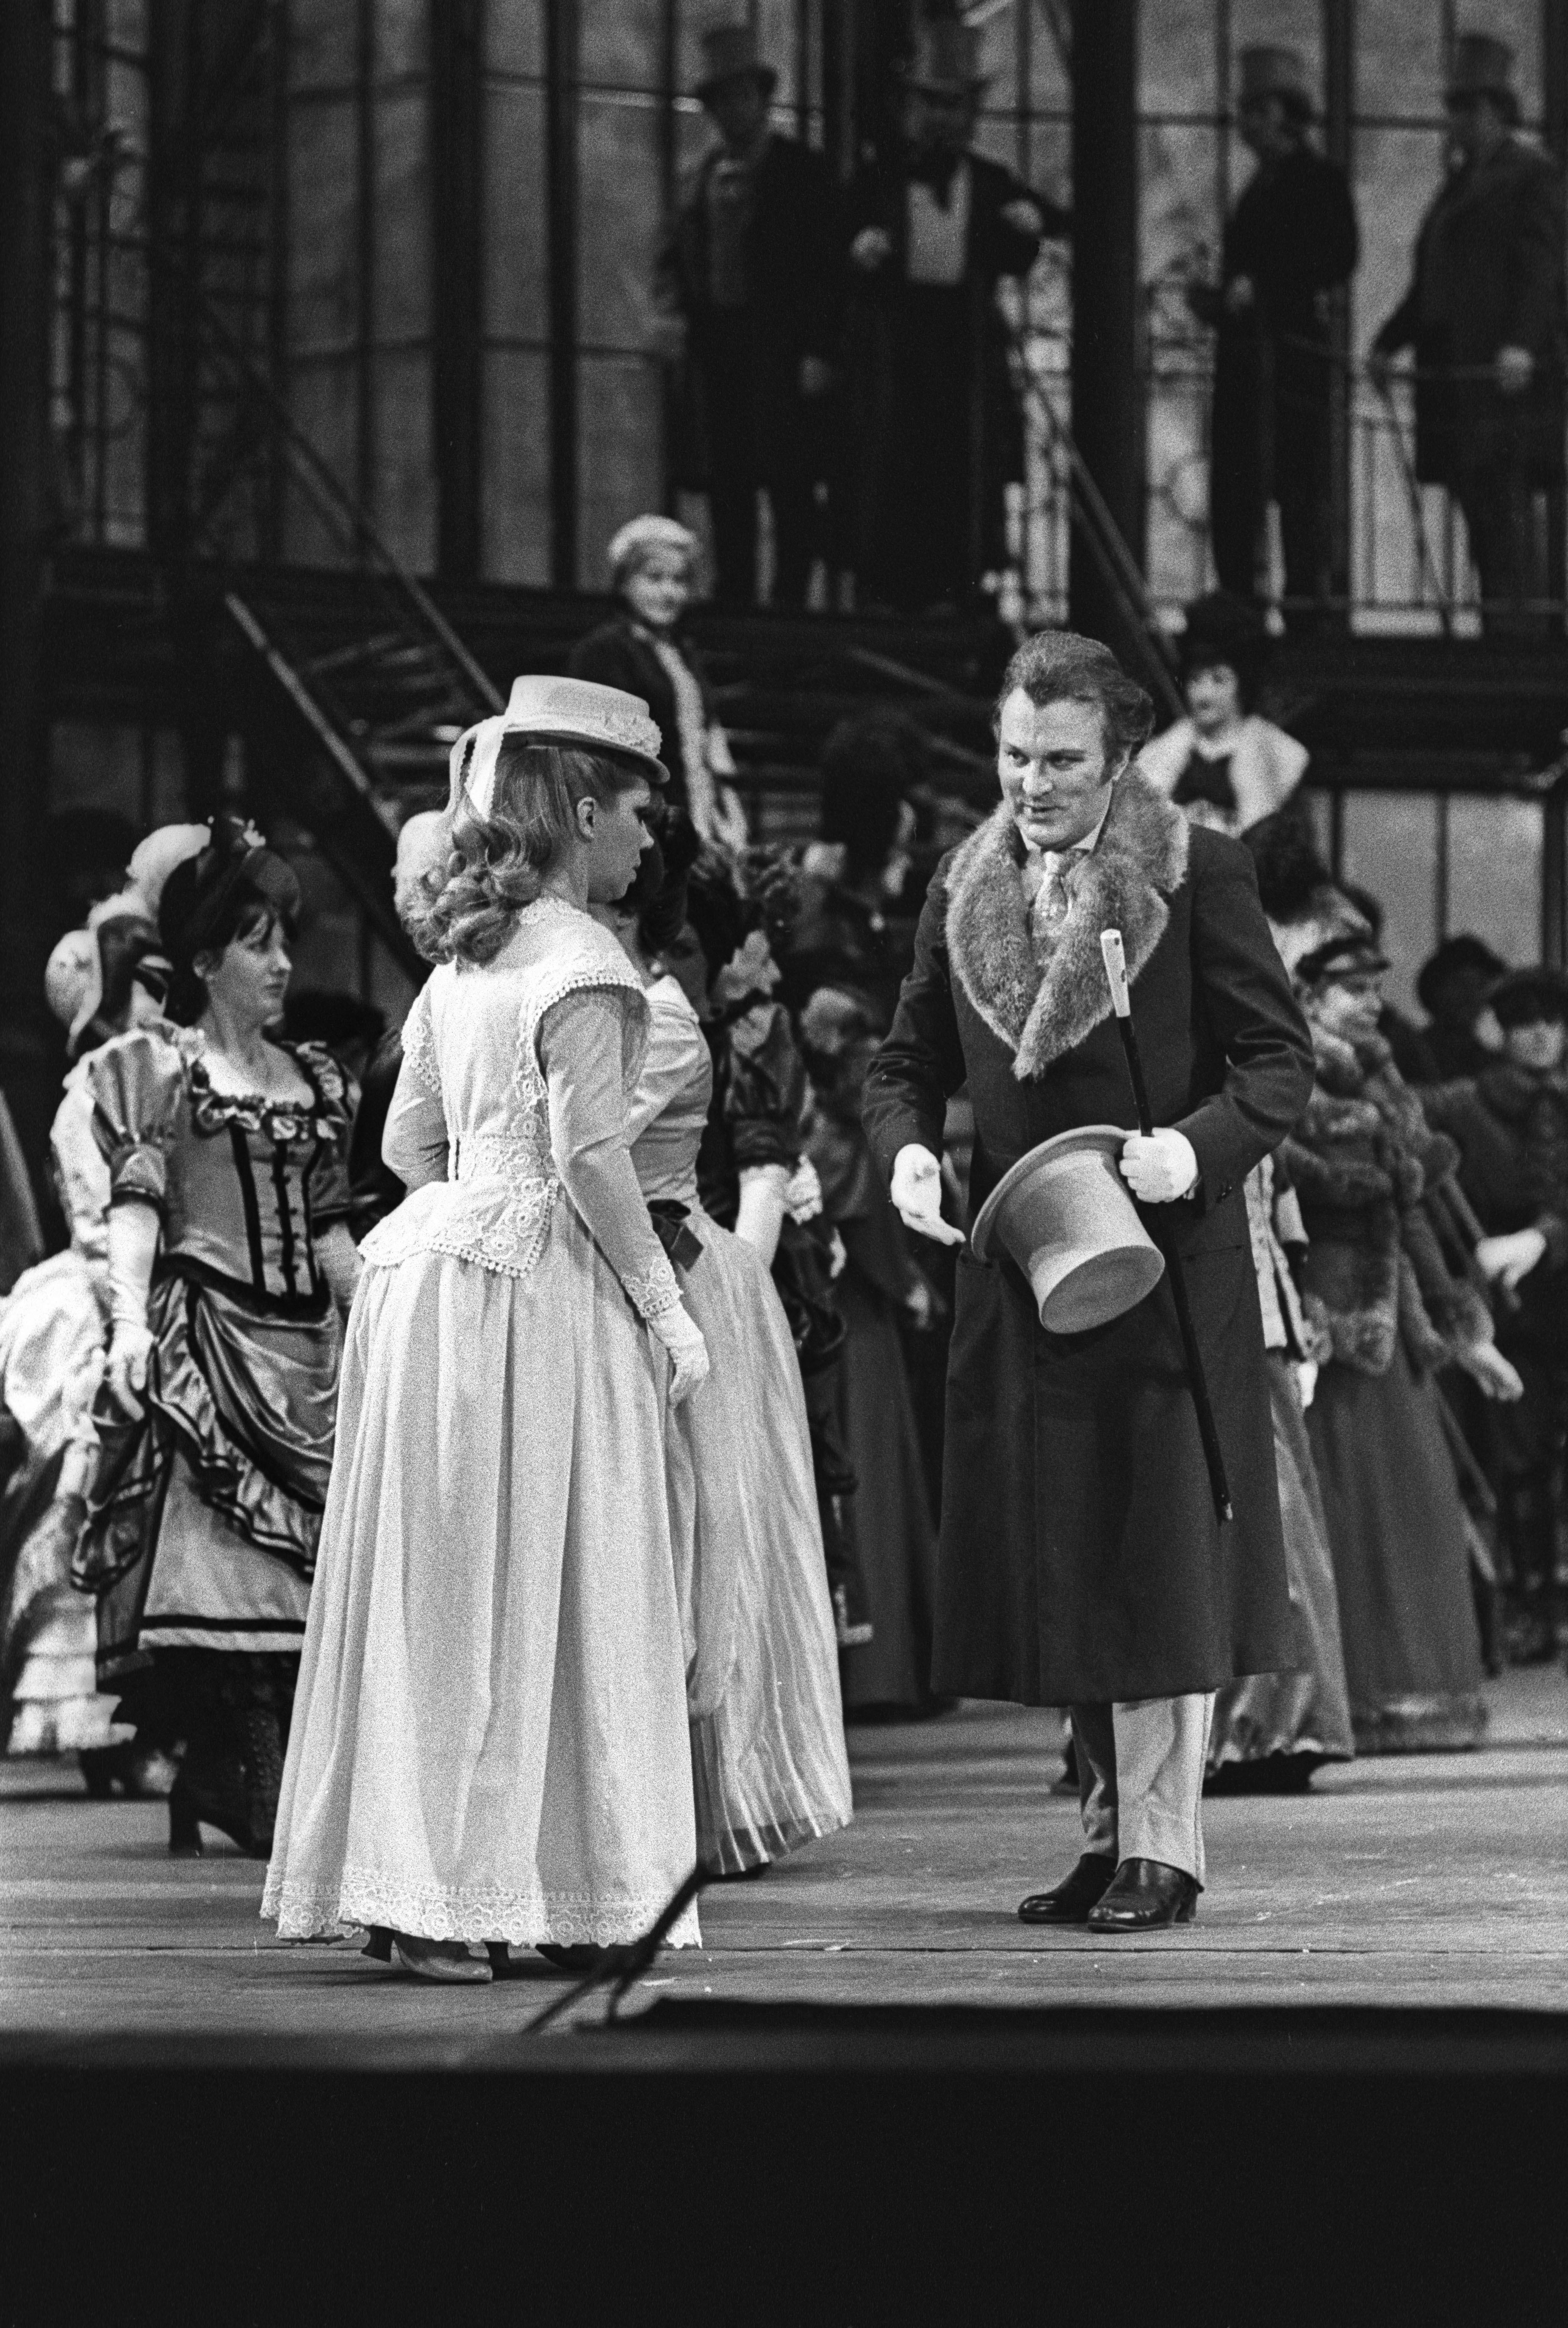 Mirella Freni e Nicolaï Gedda in “Faust" di Charles Gounod. Direttore d’orchestra: Charles Mackerras; regia: Jorge Lavelli;scene e costumi: Max Bignens. Opéra de Paris, aprile l 1976